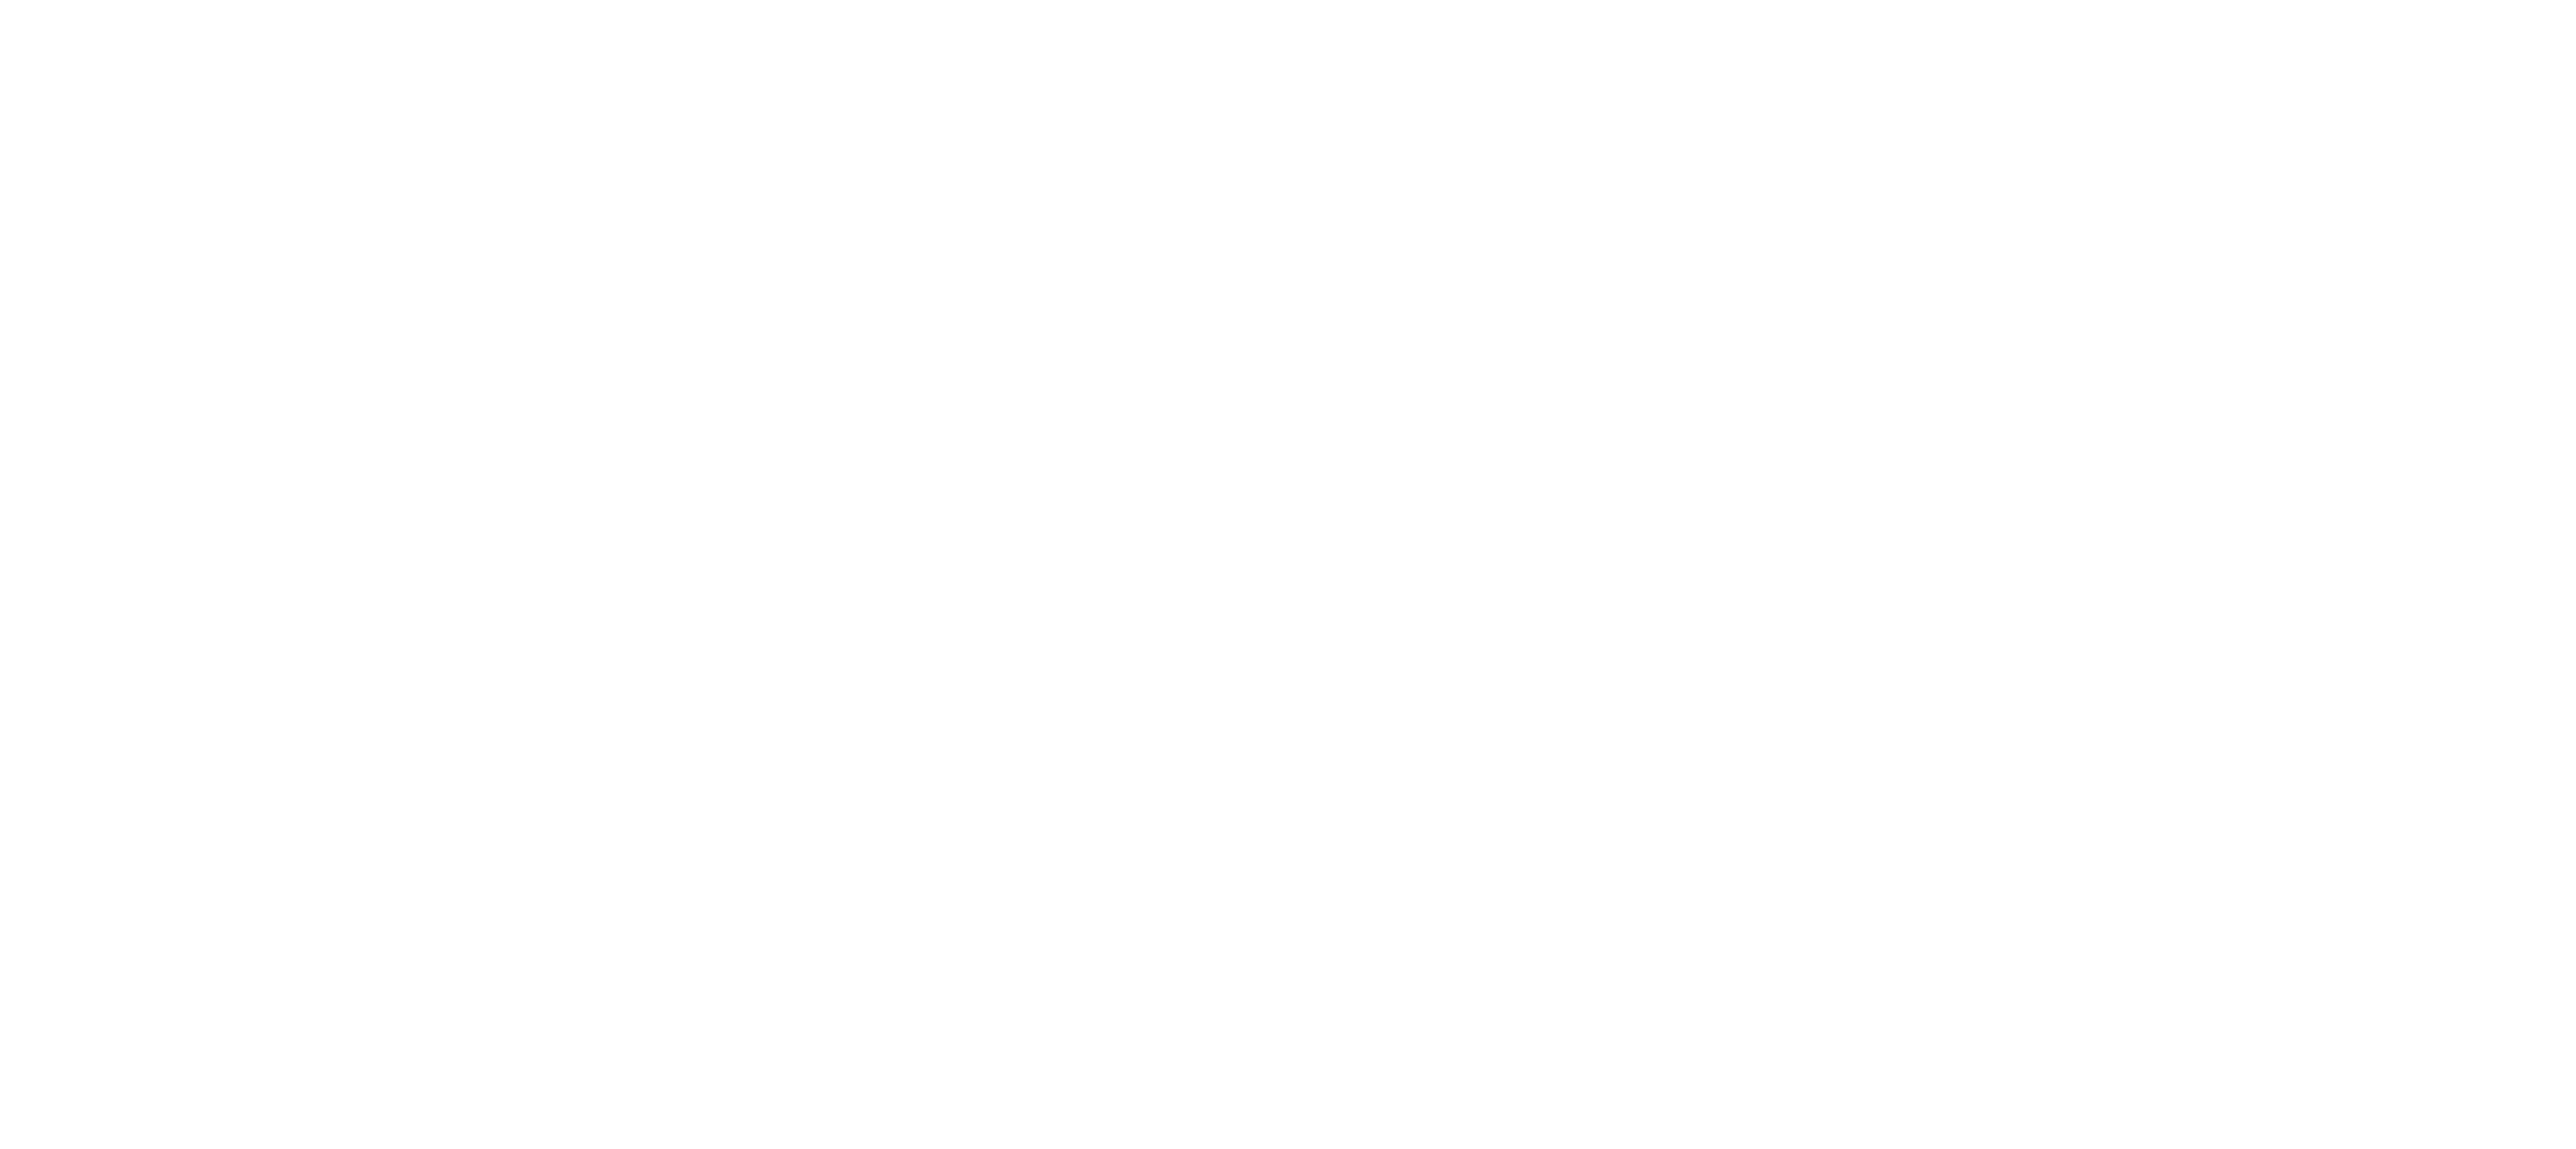 Lee Bonds Photography